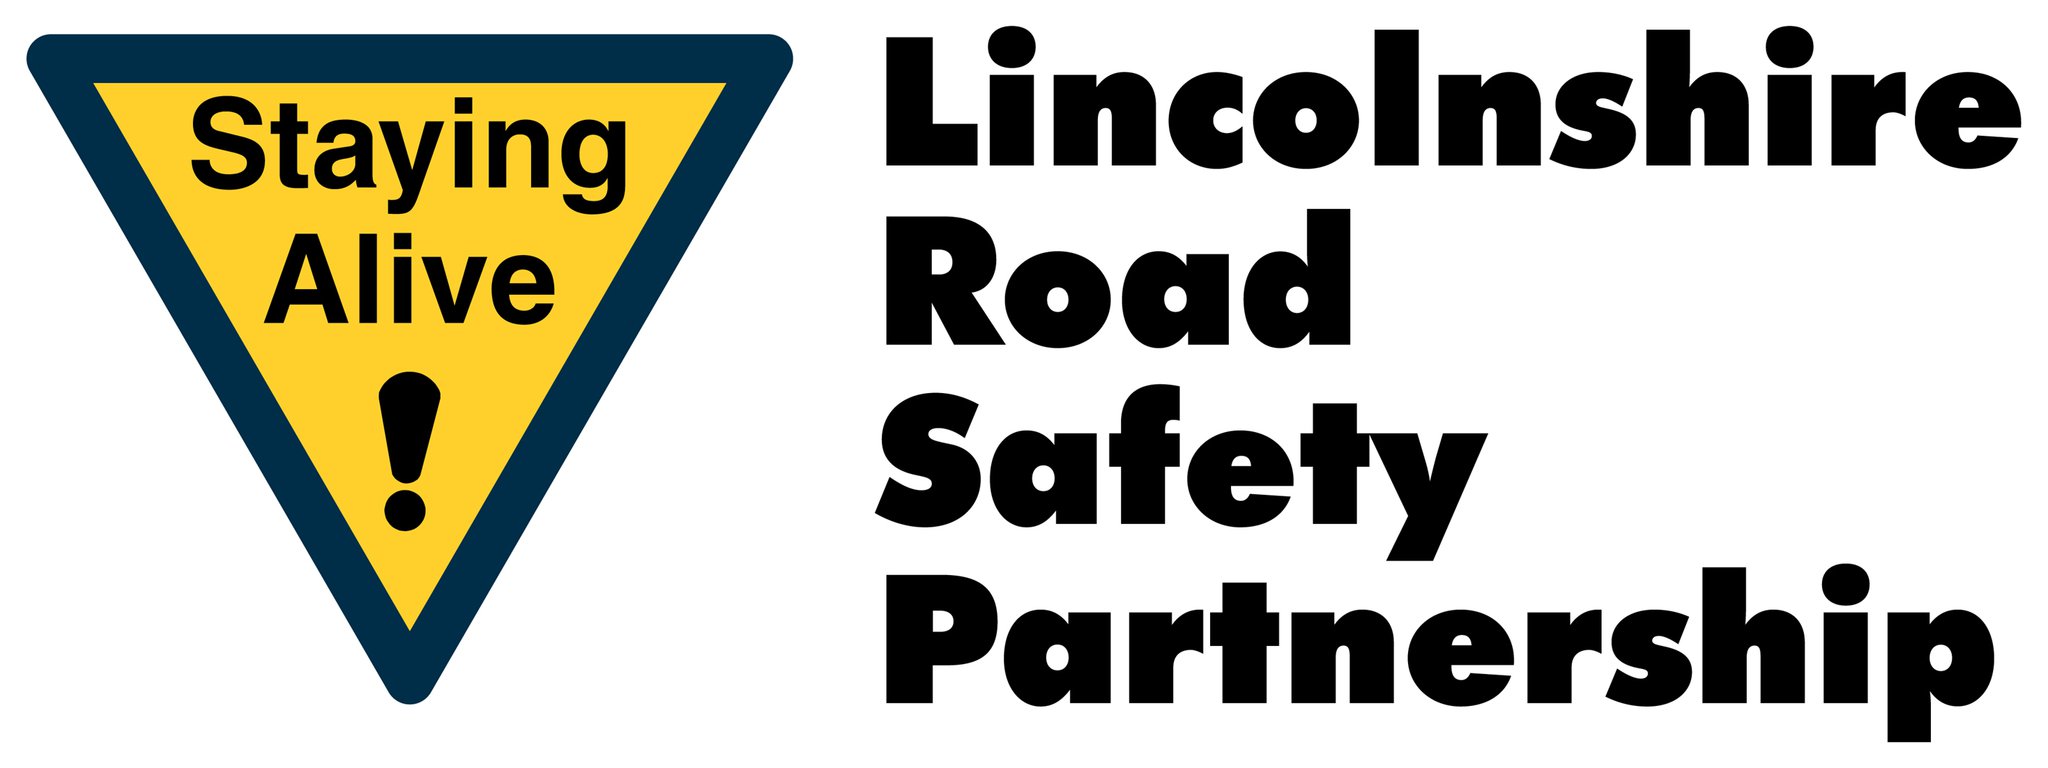 Lincs Road Safety Partnership logo